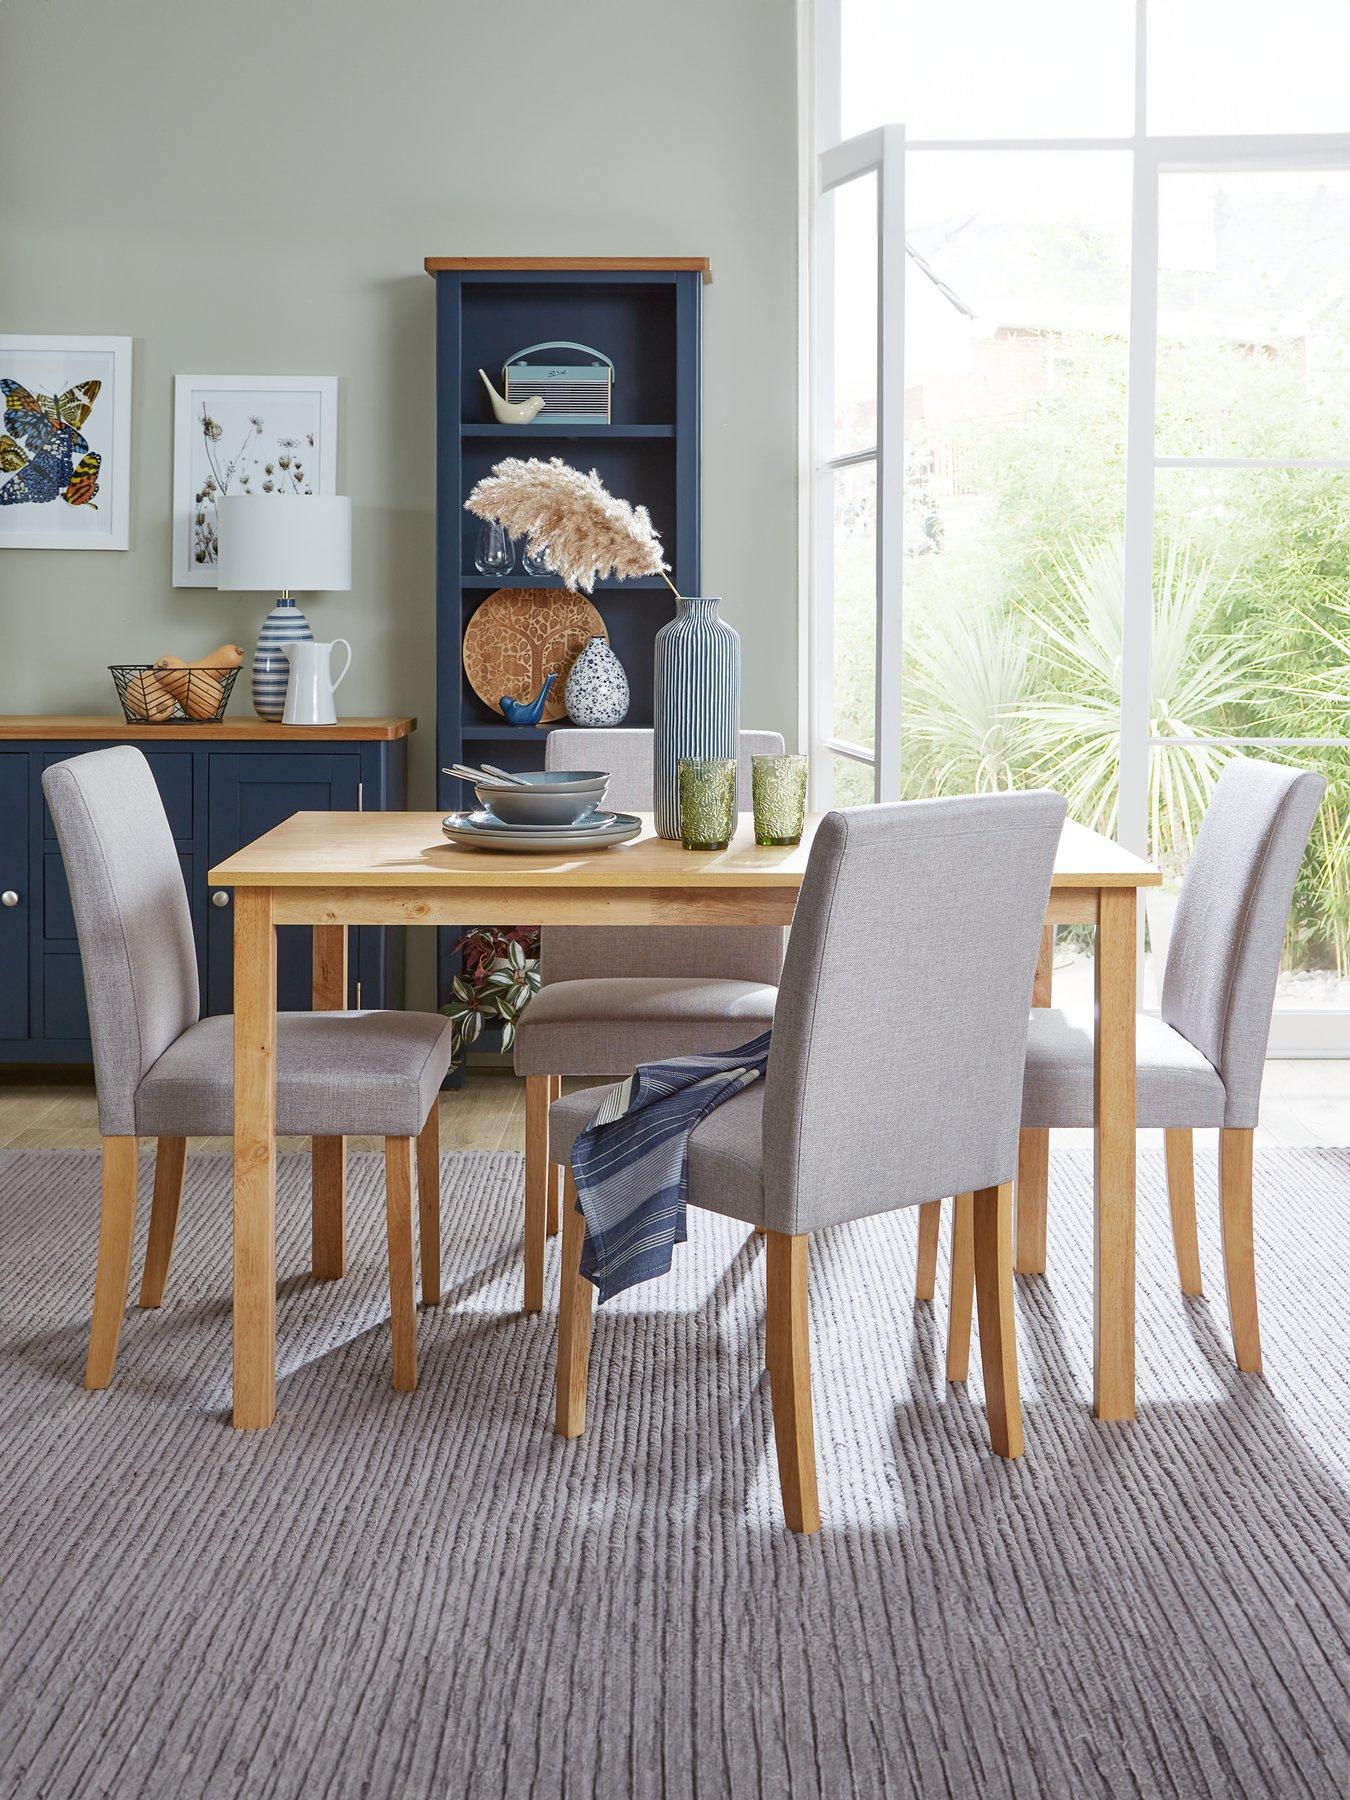 Bronx 160cm Dining Table & 4 Grey Velvet Chairs